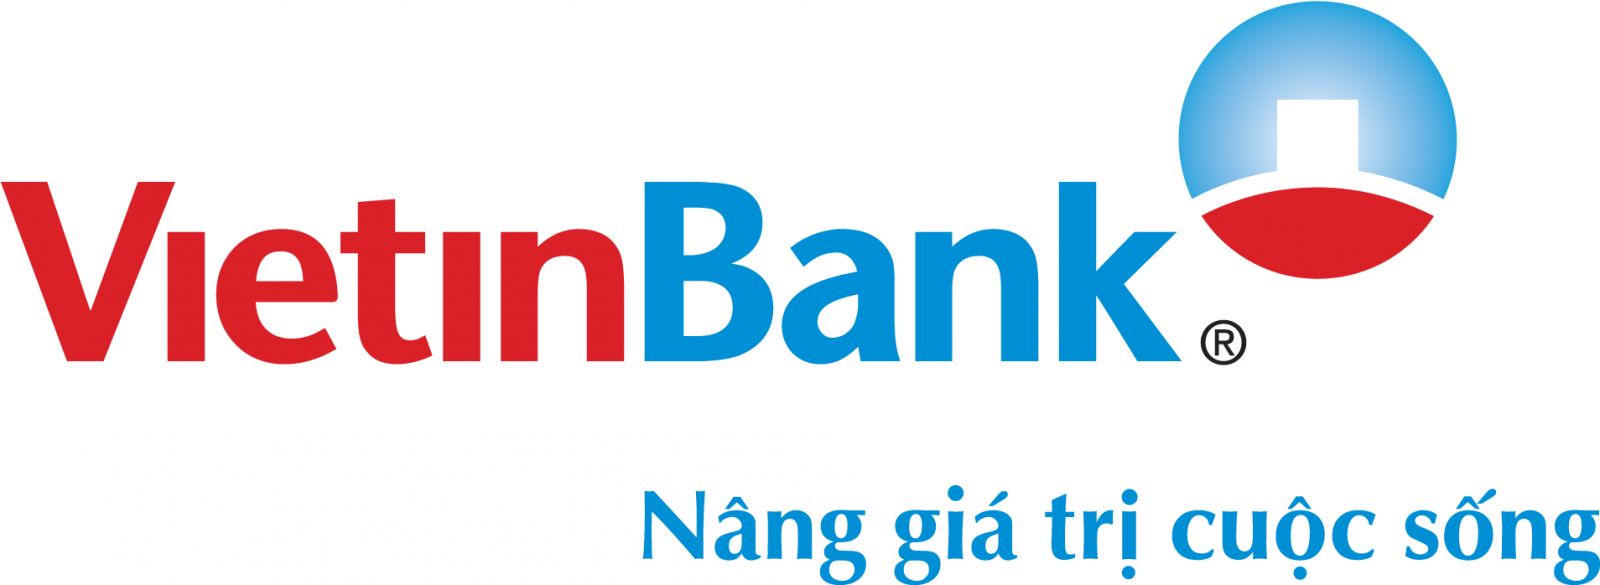 Viettinbank - Vietinbank, Transparent background PNG HD thumbnail